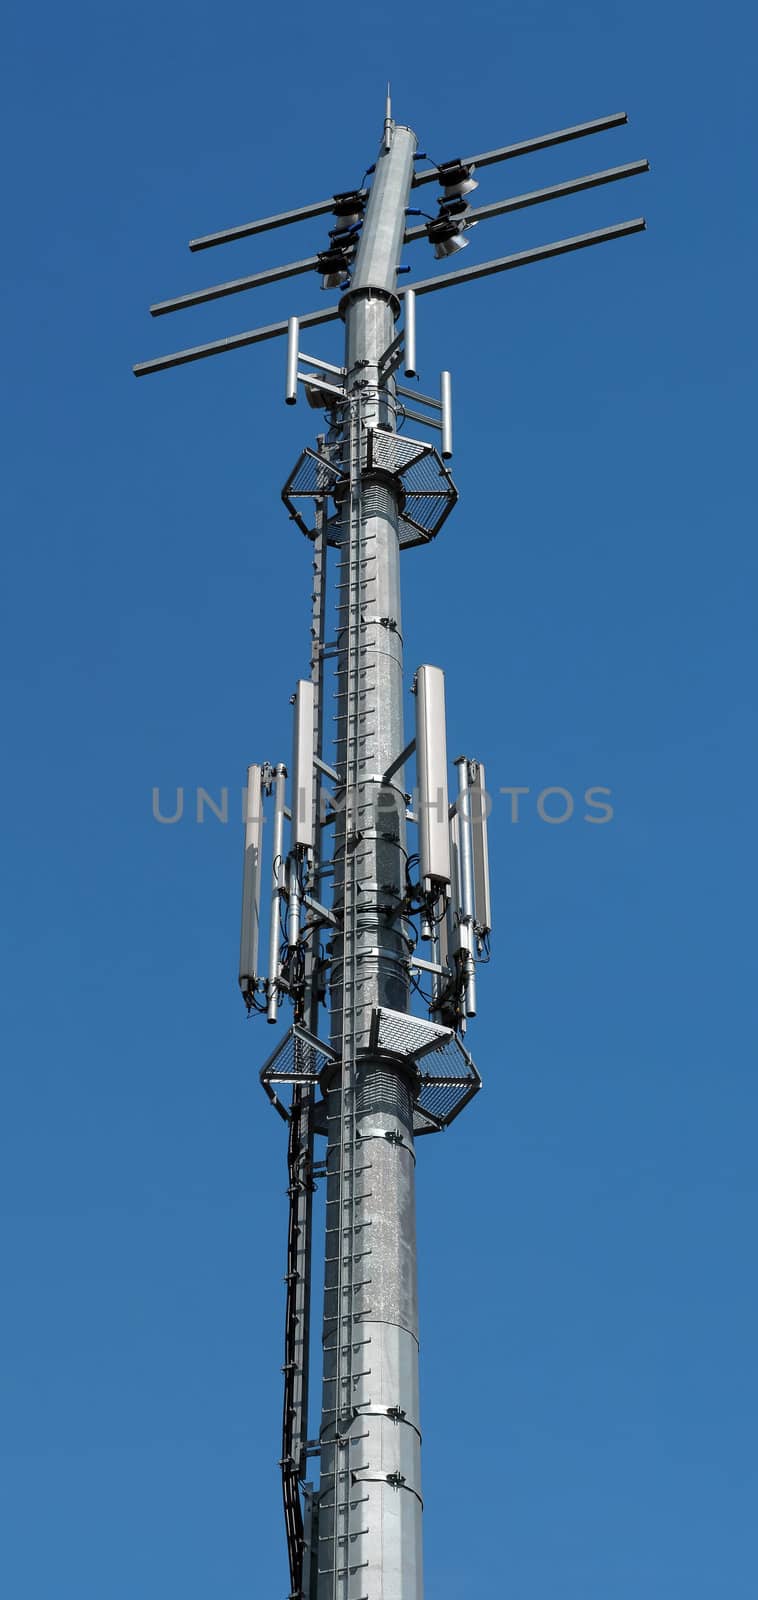 Telecom antenna by Vectorex